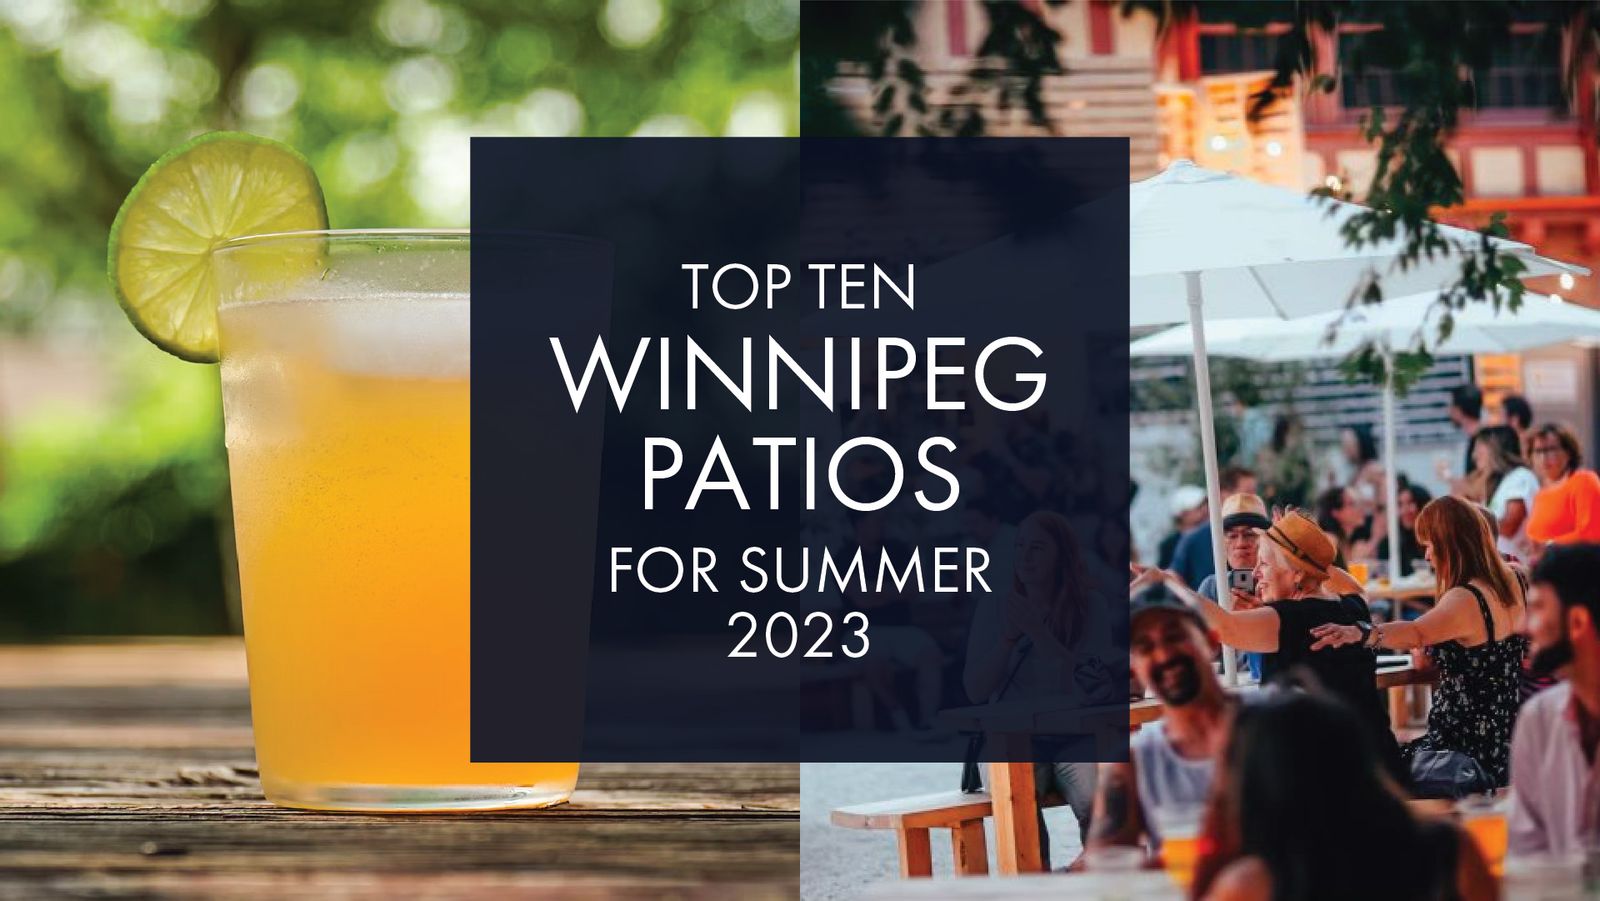 Top Ten Winnipeg Patios for Summer 2023